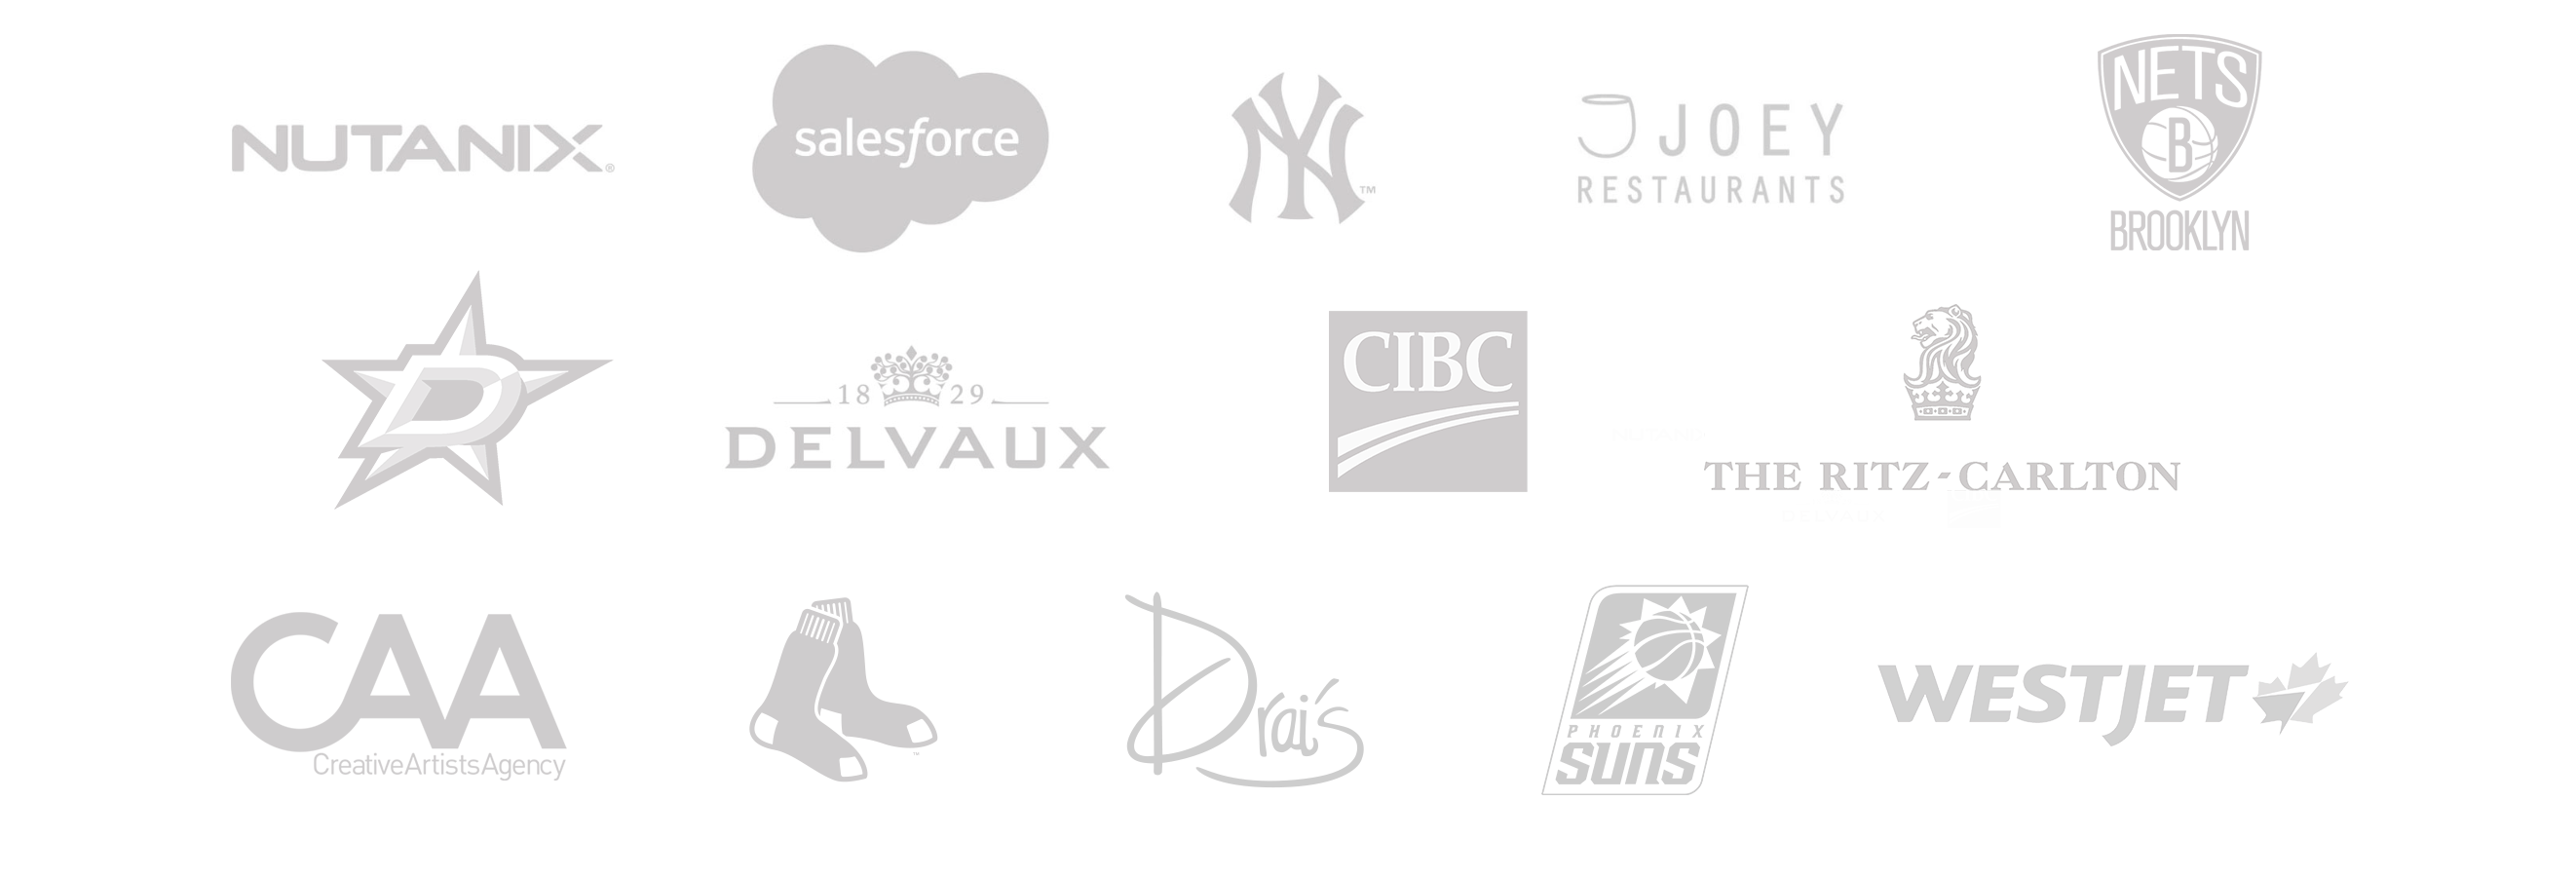 Some of those partners are: Nutanix, Salesforce, New York Yankees, Joey Resturants, BSE Global, Delvaux desktop